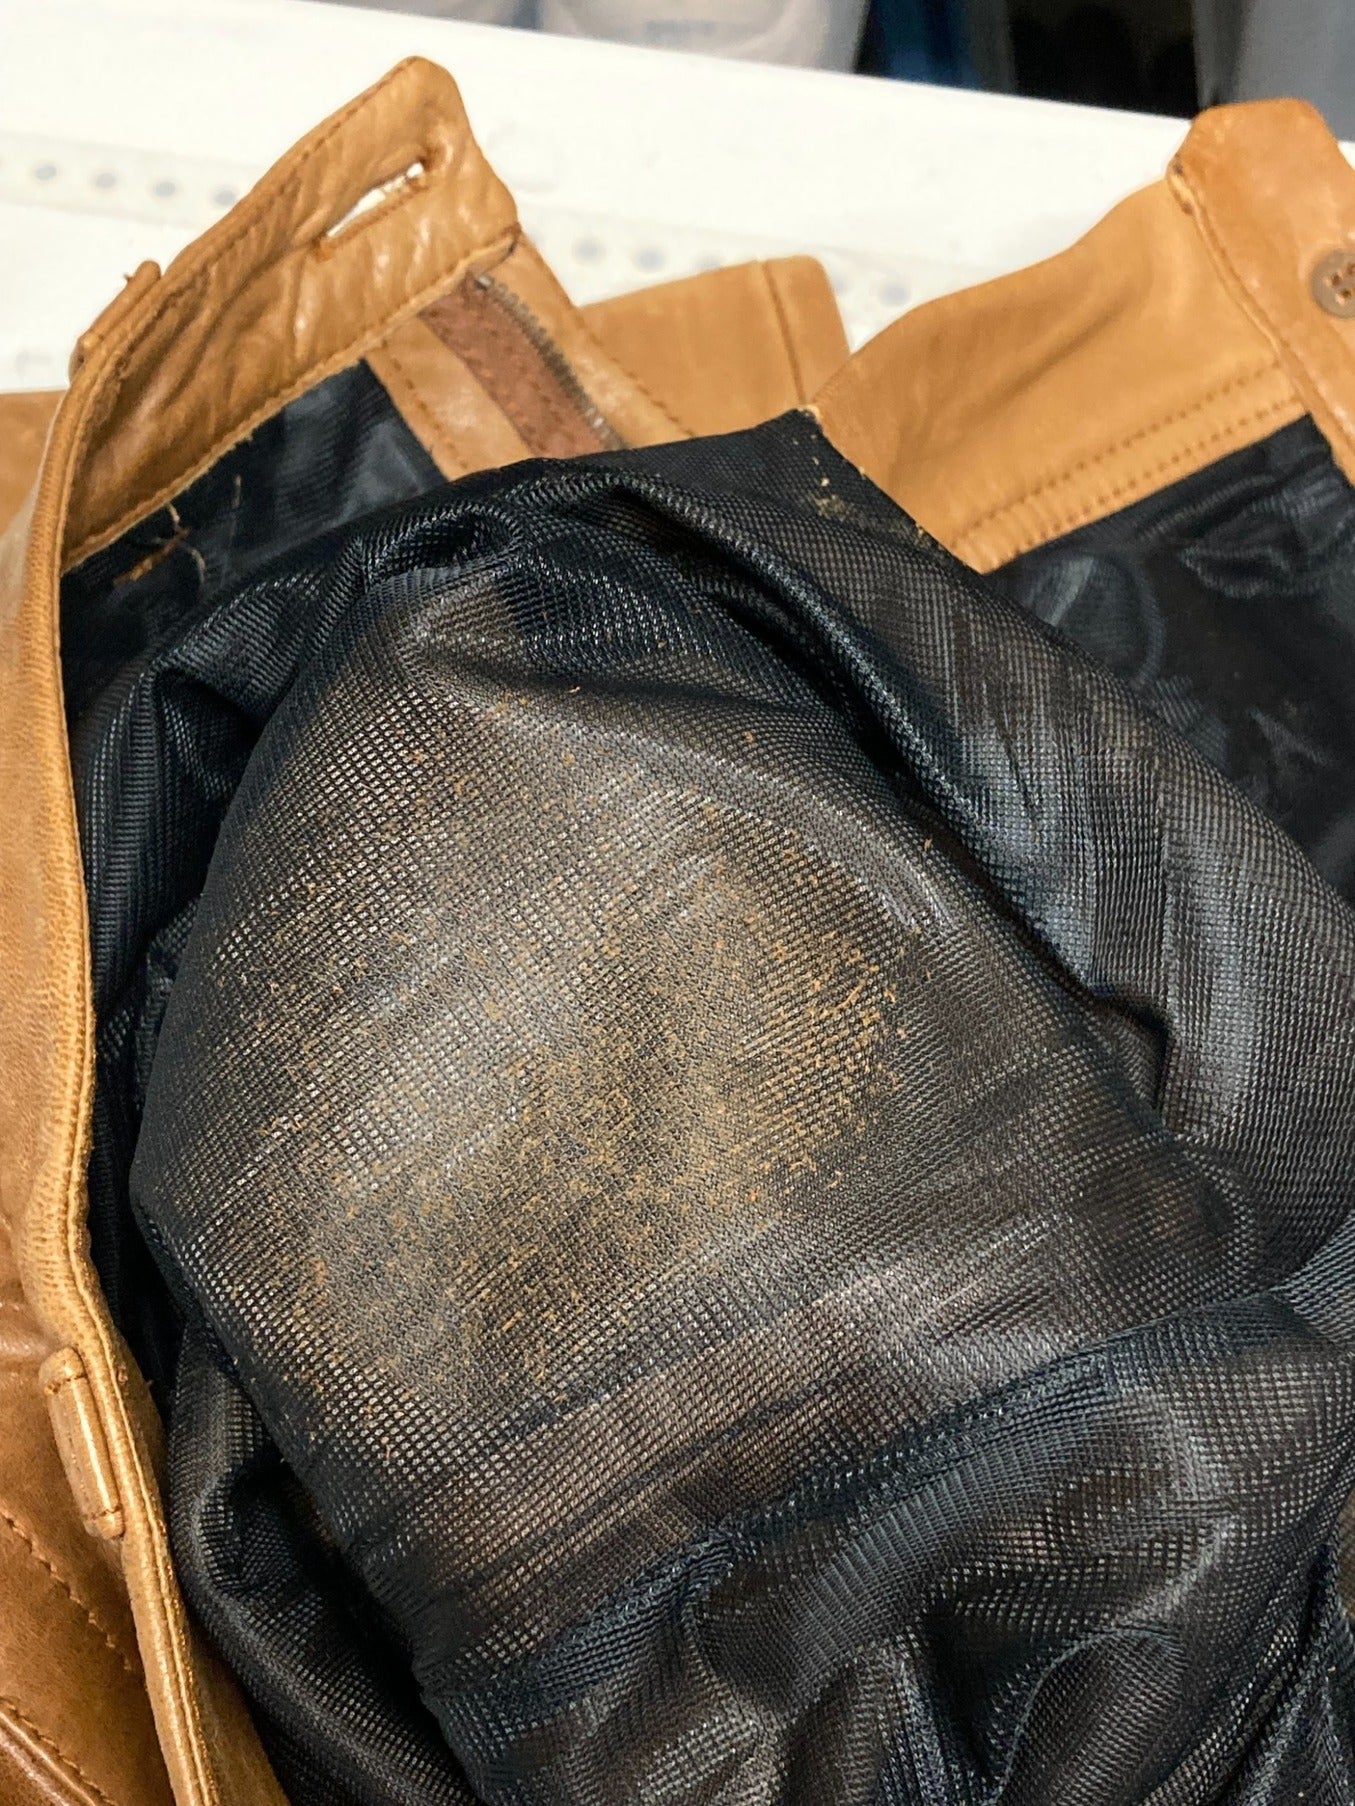 Dirk Bikkembergs leather pants